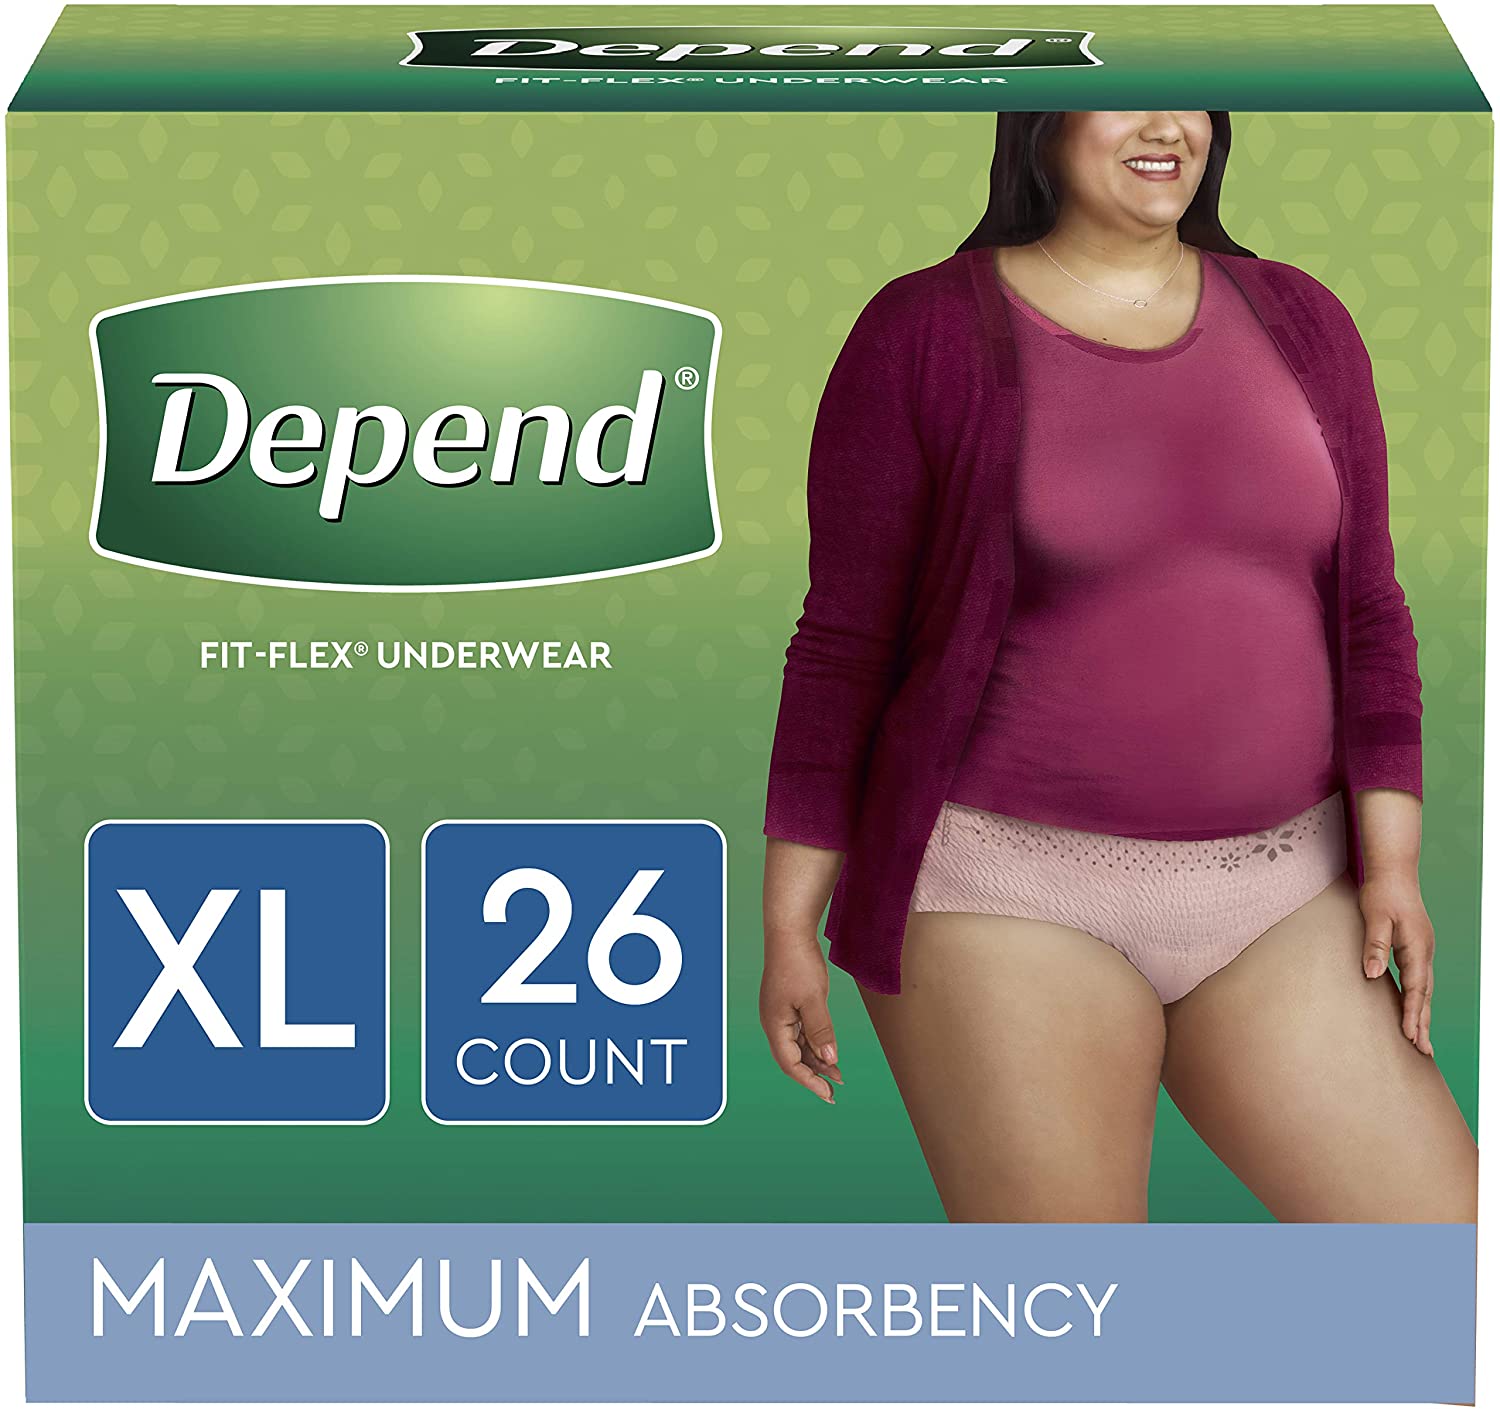 Depend FIT-Flex Incontinence Underwear for Women